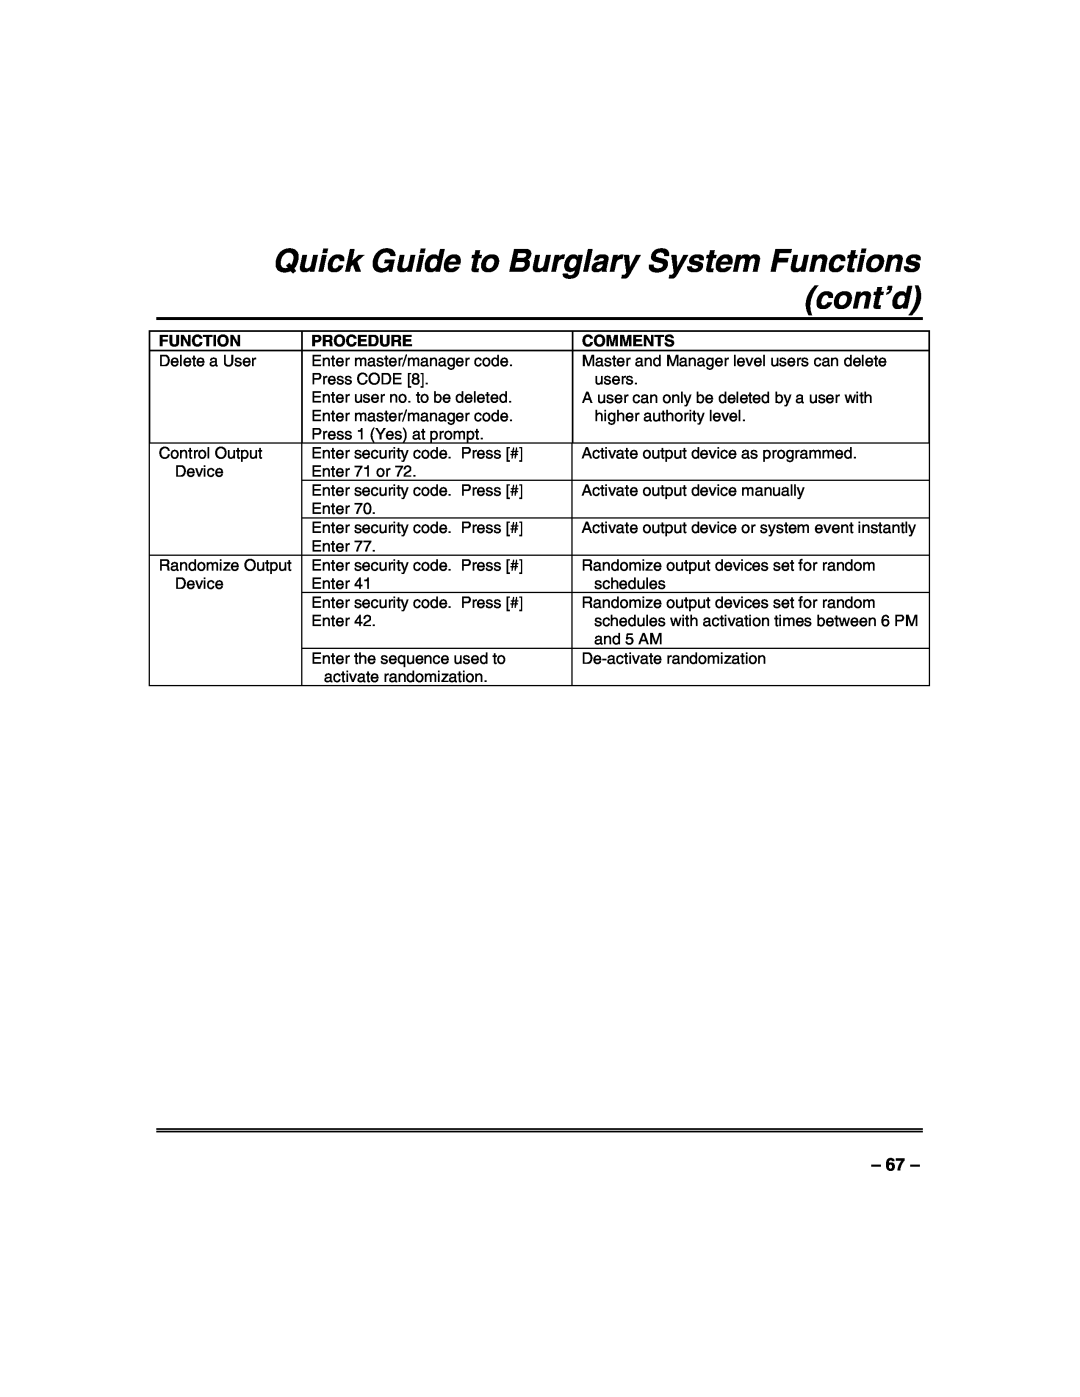 Honeywell VISTA-128FBP, VISTA-250FBP manual Quick Guide to Burglary System Functions cont’d, Procedure, Comments 